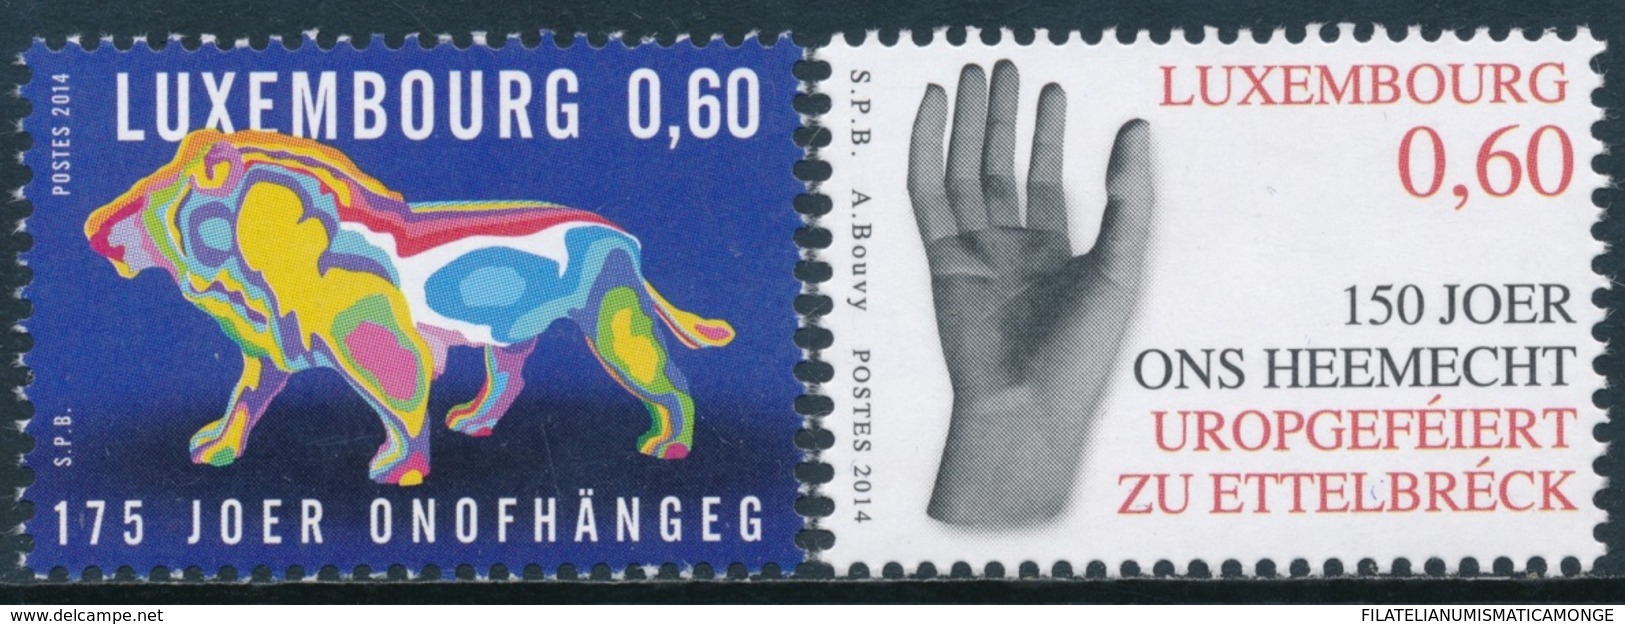 Luxemburgo 2014  Yvert Tellier Nº  1953/54 ** Aniversarios  (2v) - Nuevos